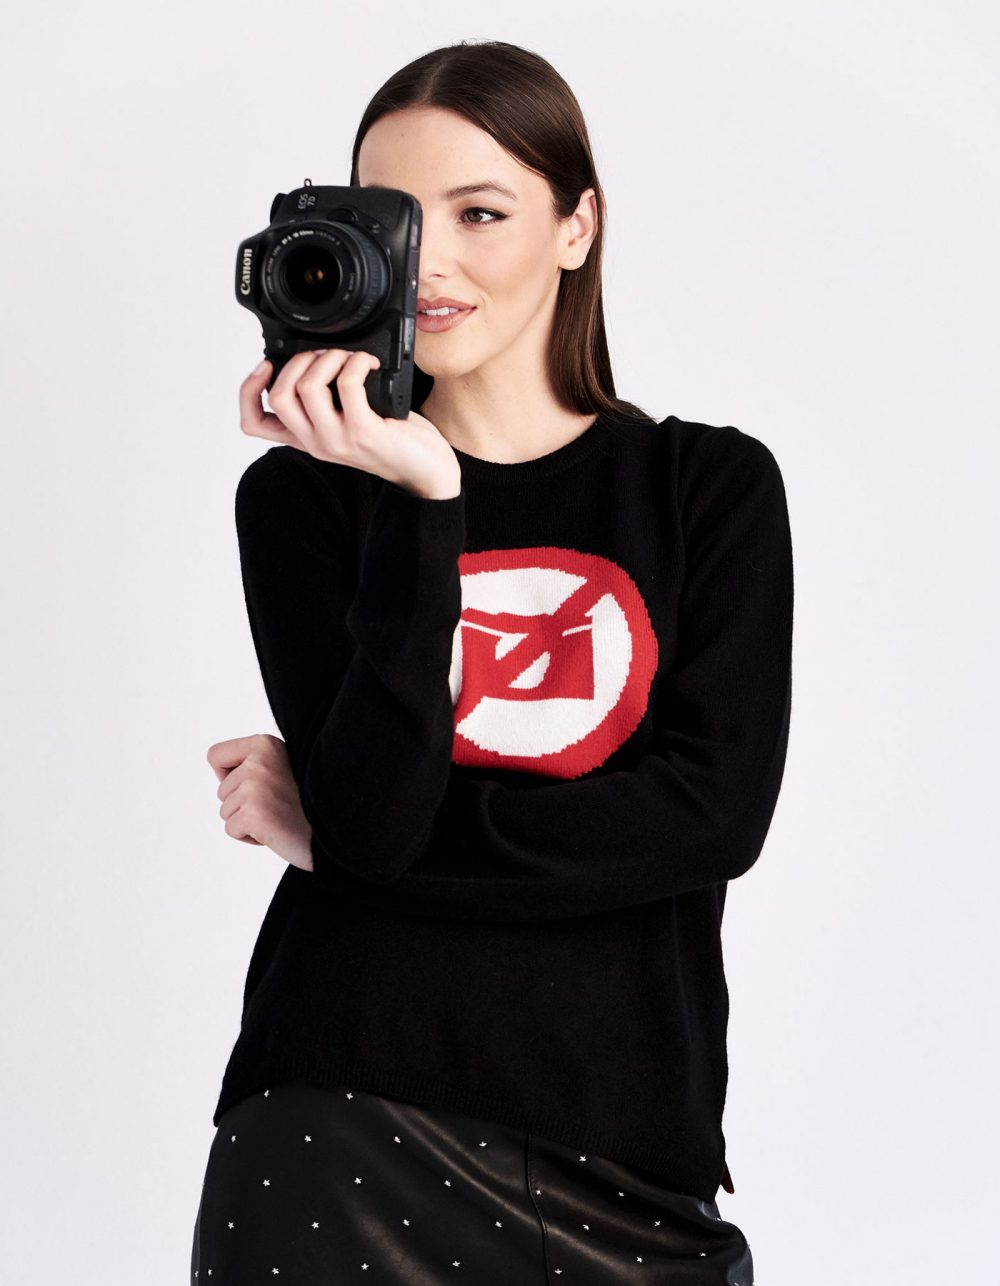 Camera photograph design on black cashmere jumpers.